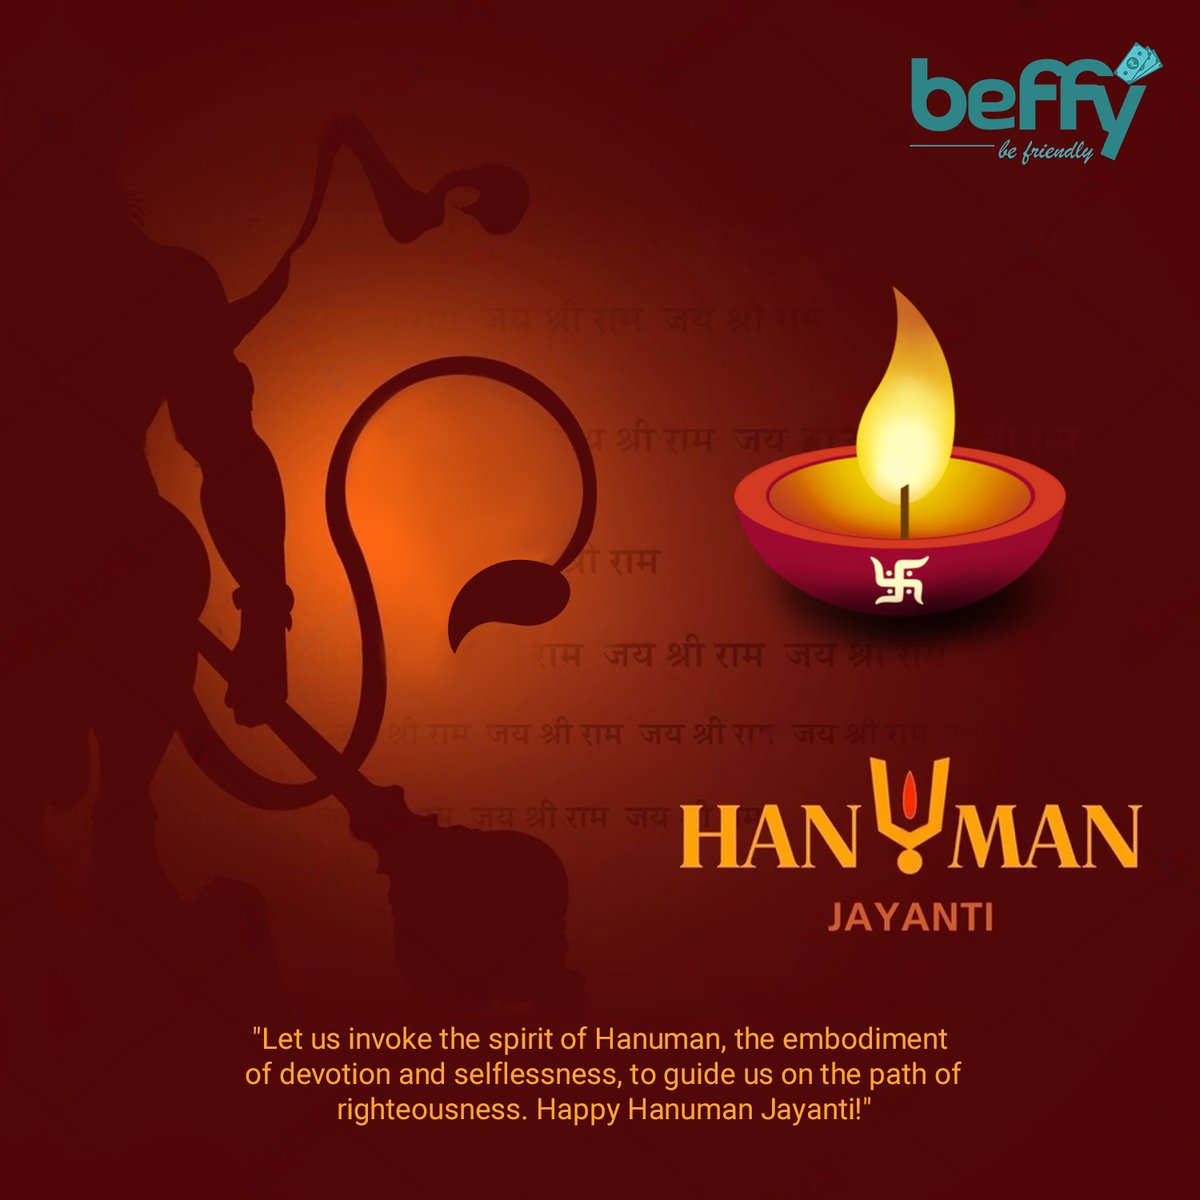 Happy Hanuman Jayanti from Team Beffy.
#beffy #beffyfinserv #fintechrevolution #beffy #CashDeposit #Deposit #WITHDRAW #withdrawals #CashWithdrawal #BaLANCEinquiry #AADHARPAY #moneytransferapp #hanumanjayanti #happyhumans #happyhanumanjayanti #hanumanchalisha #hanumanjayanti2024